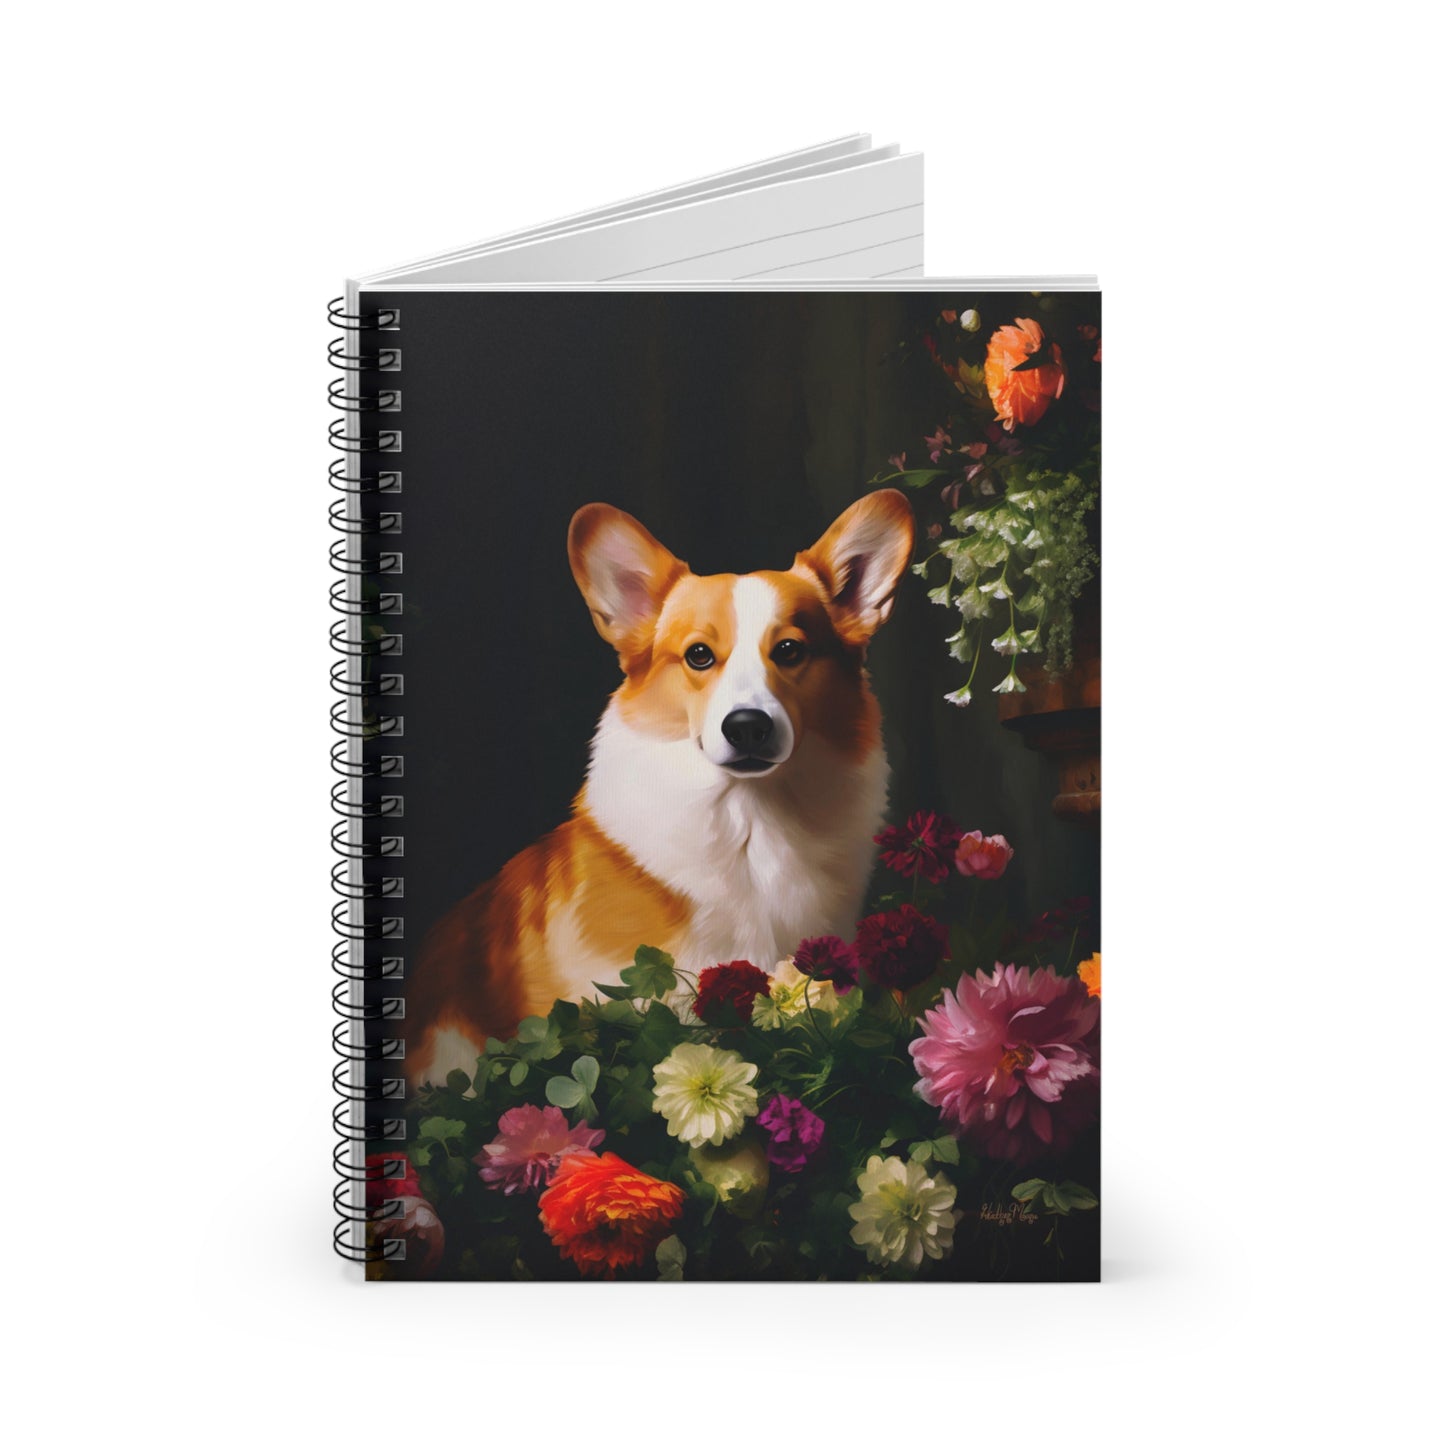 Corgi Amongst Flowers | Ruled Line Spiral Notebook